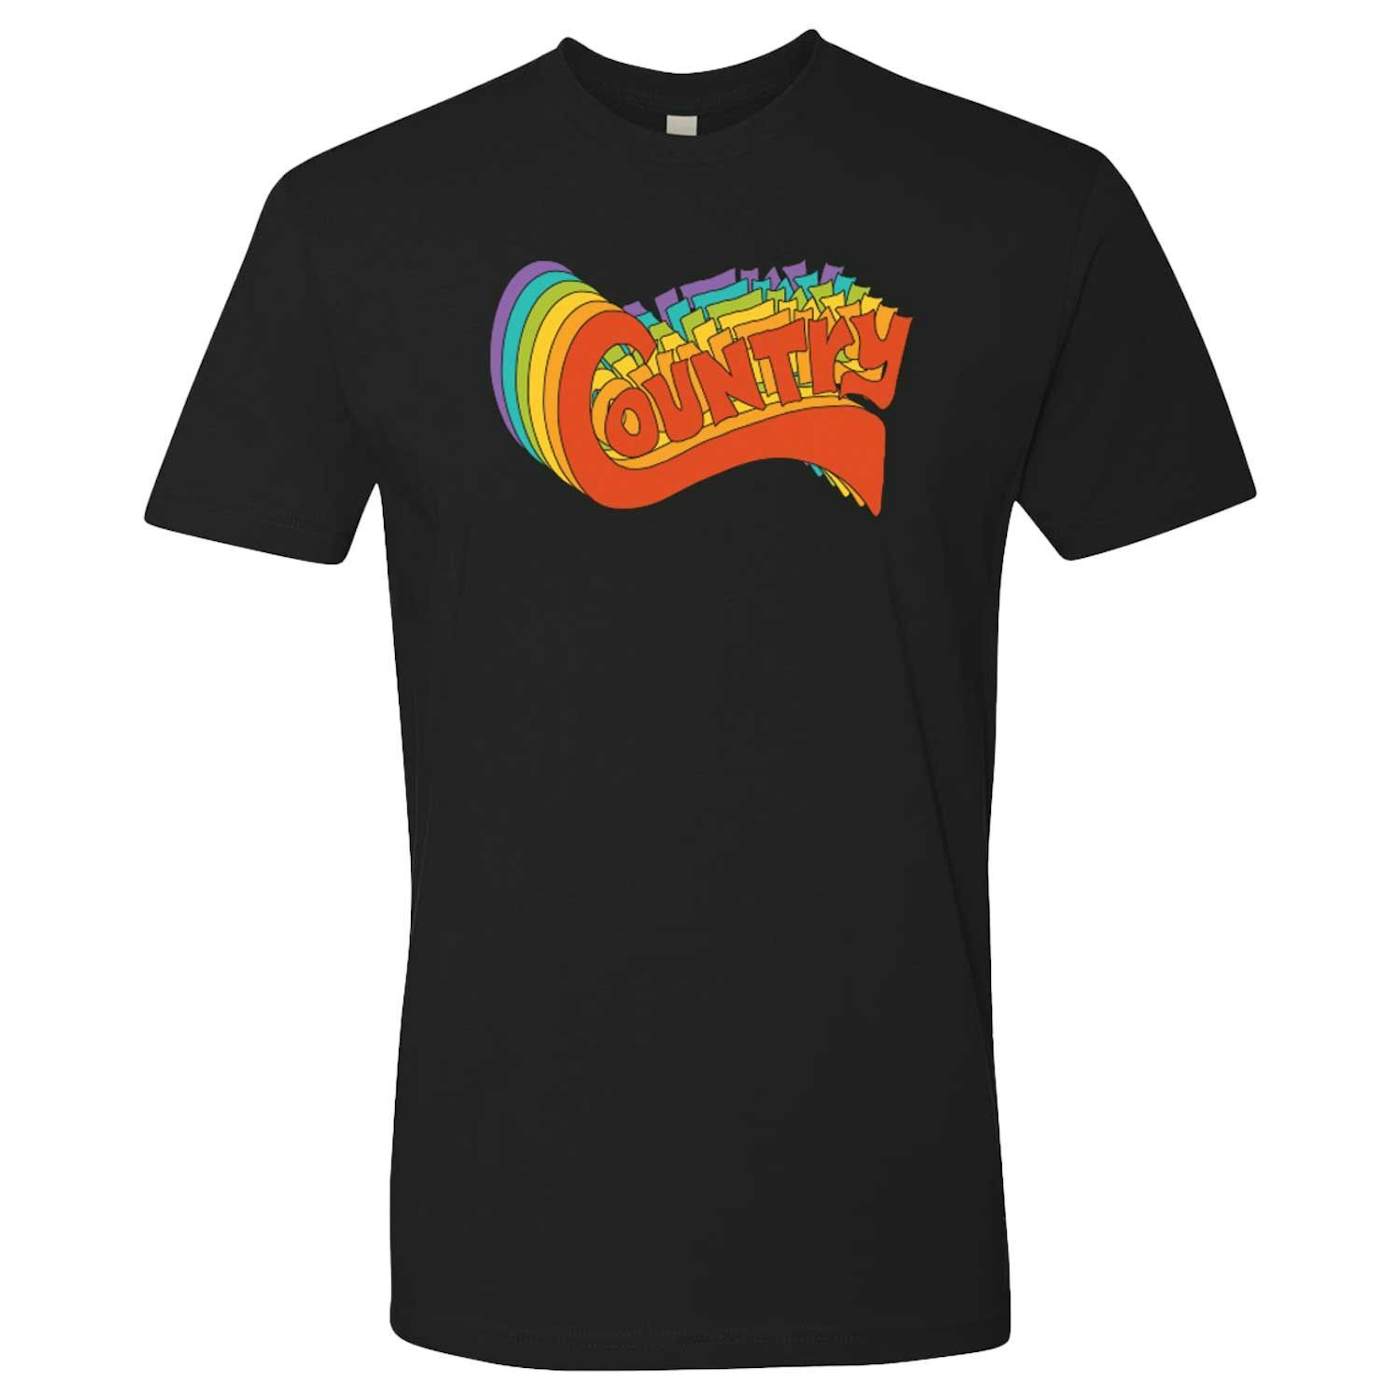 Brent Cobb Country T-shirt